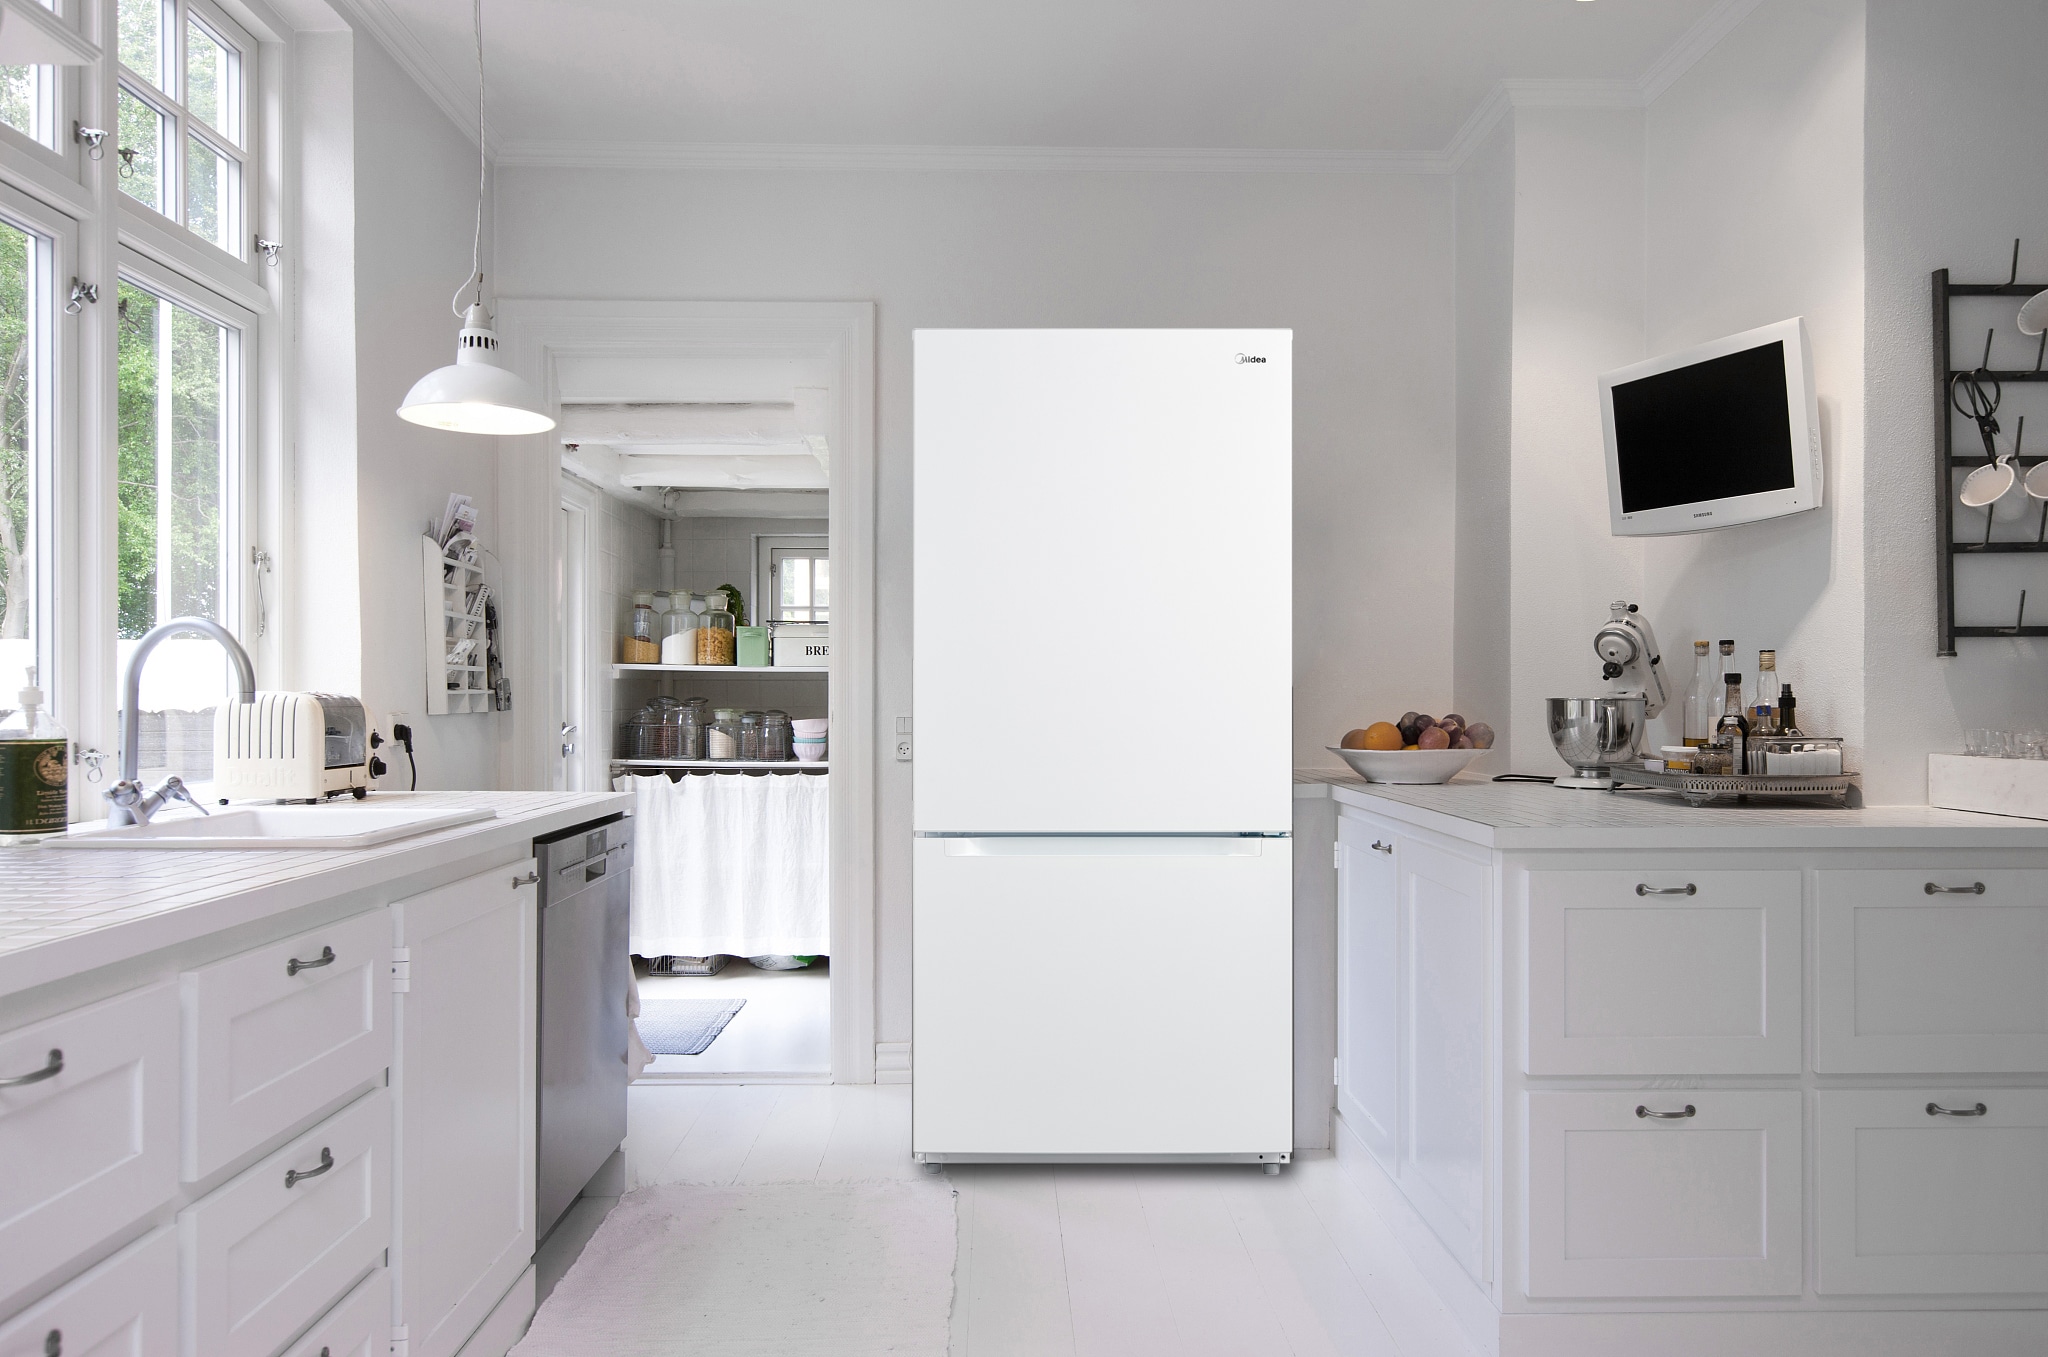 Midea 18.7-cu ft Bottom-Freezer Refrigerator (White) ENERGY STAR in the  Bottom-Freezer Refrigerators department at